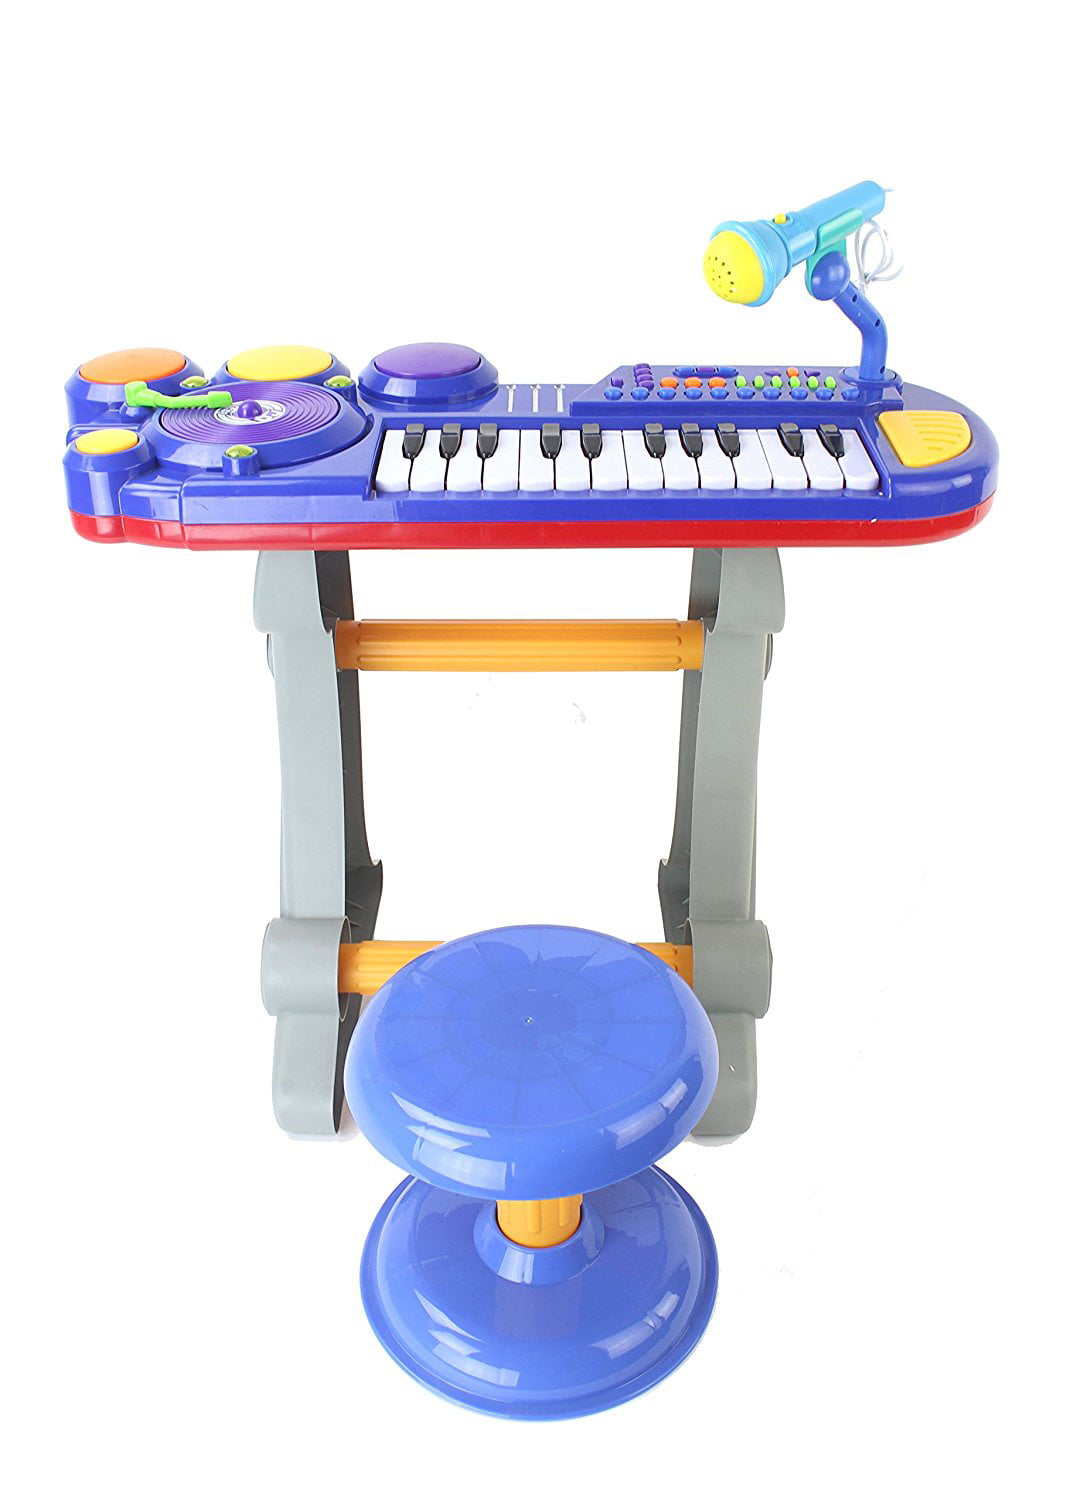 HOMCOM Kids Piano Drum Set Toy Percussion Music Sound Instrument Keyboard Stool 